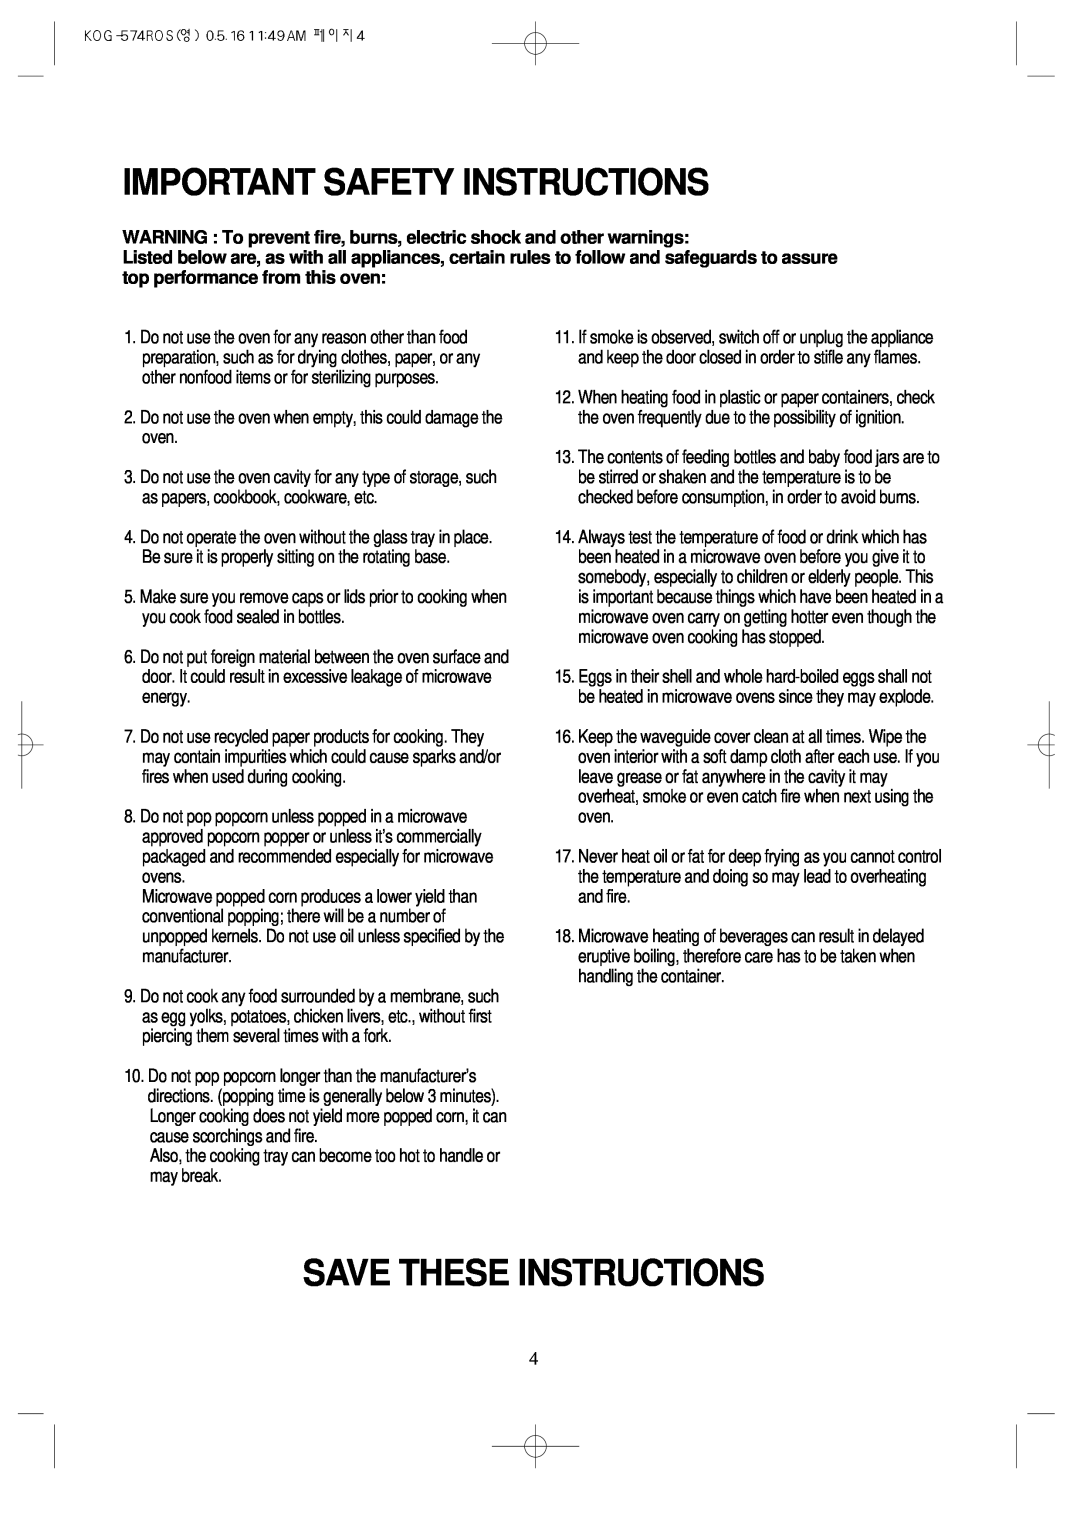 Daewoo KOG-574R operating instructions Important Safety Instructions, Save These Instructions 